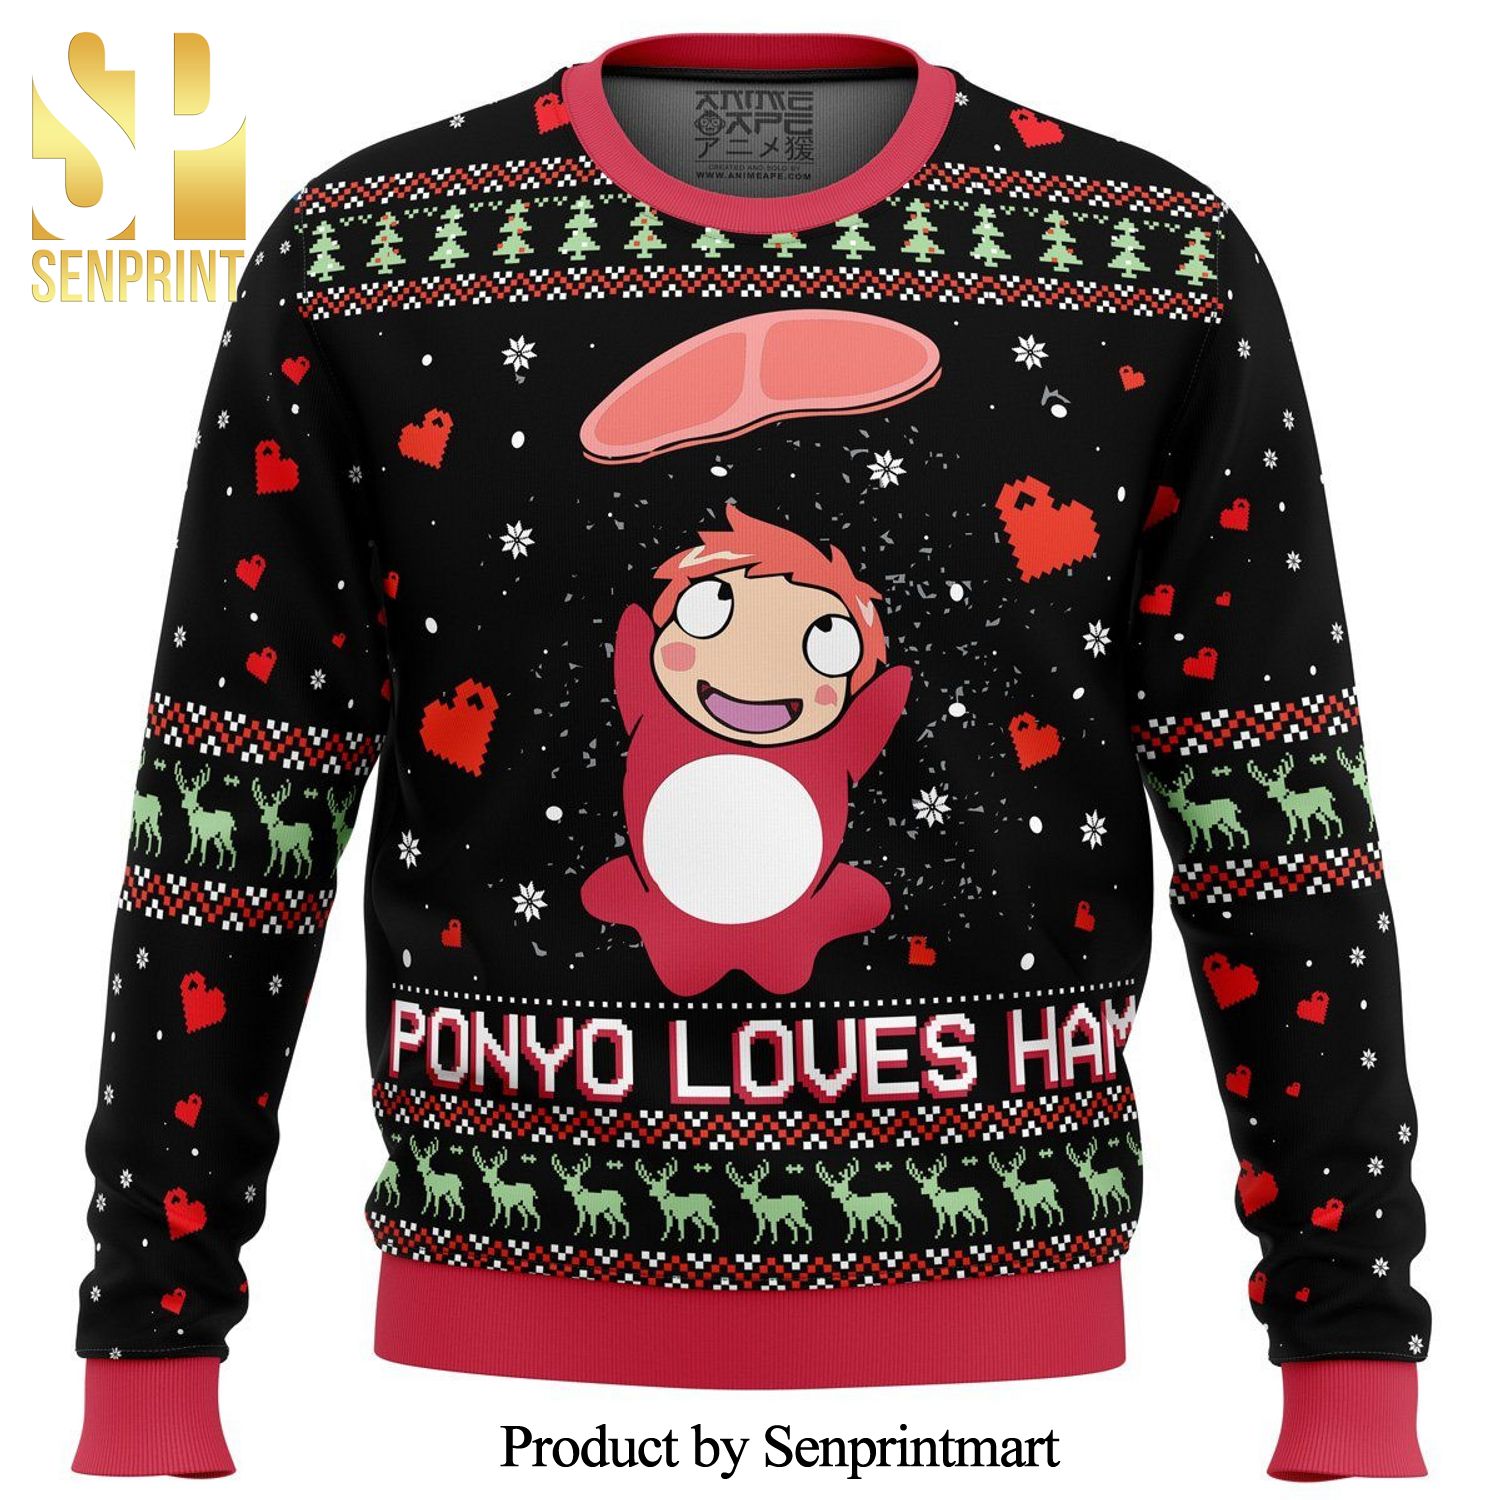 Studio Ghibli Ponyo Loves Ham Miyazaki Premium Manga Anime Knitted Ugly Christmas Sweater